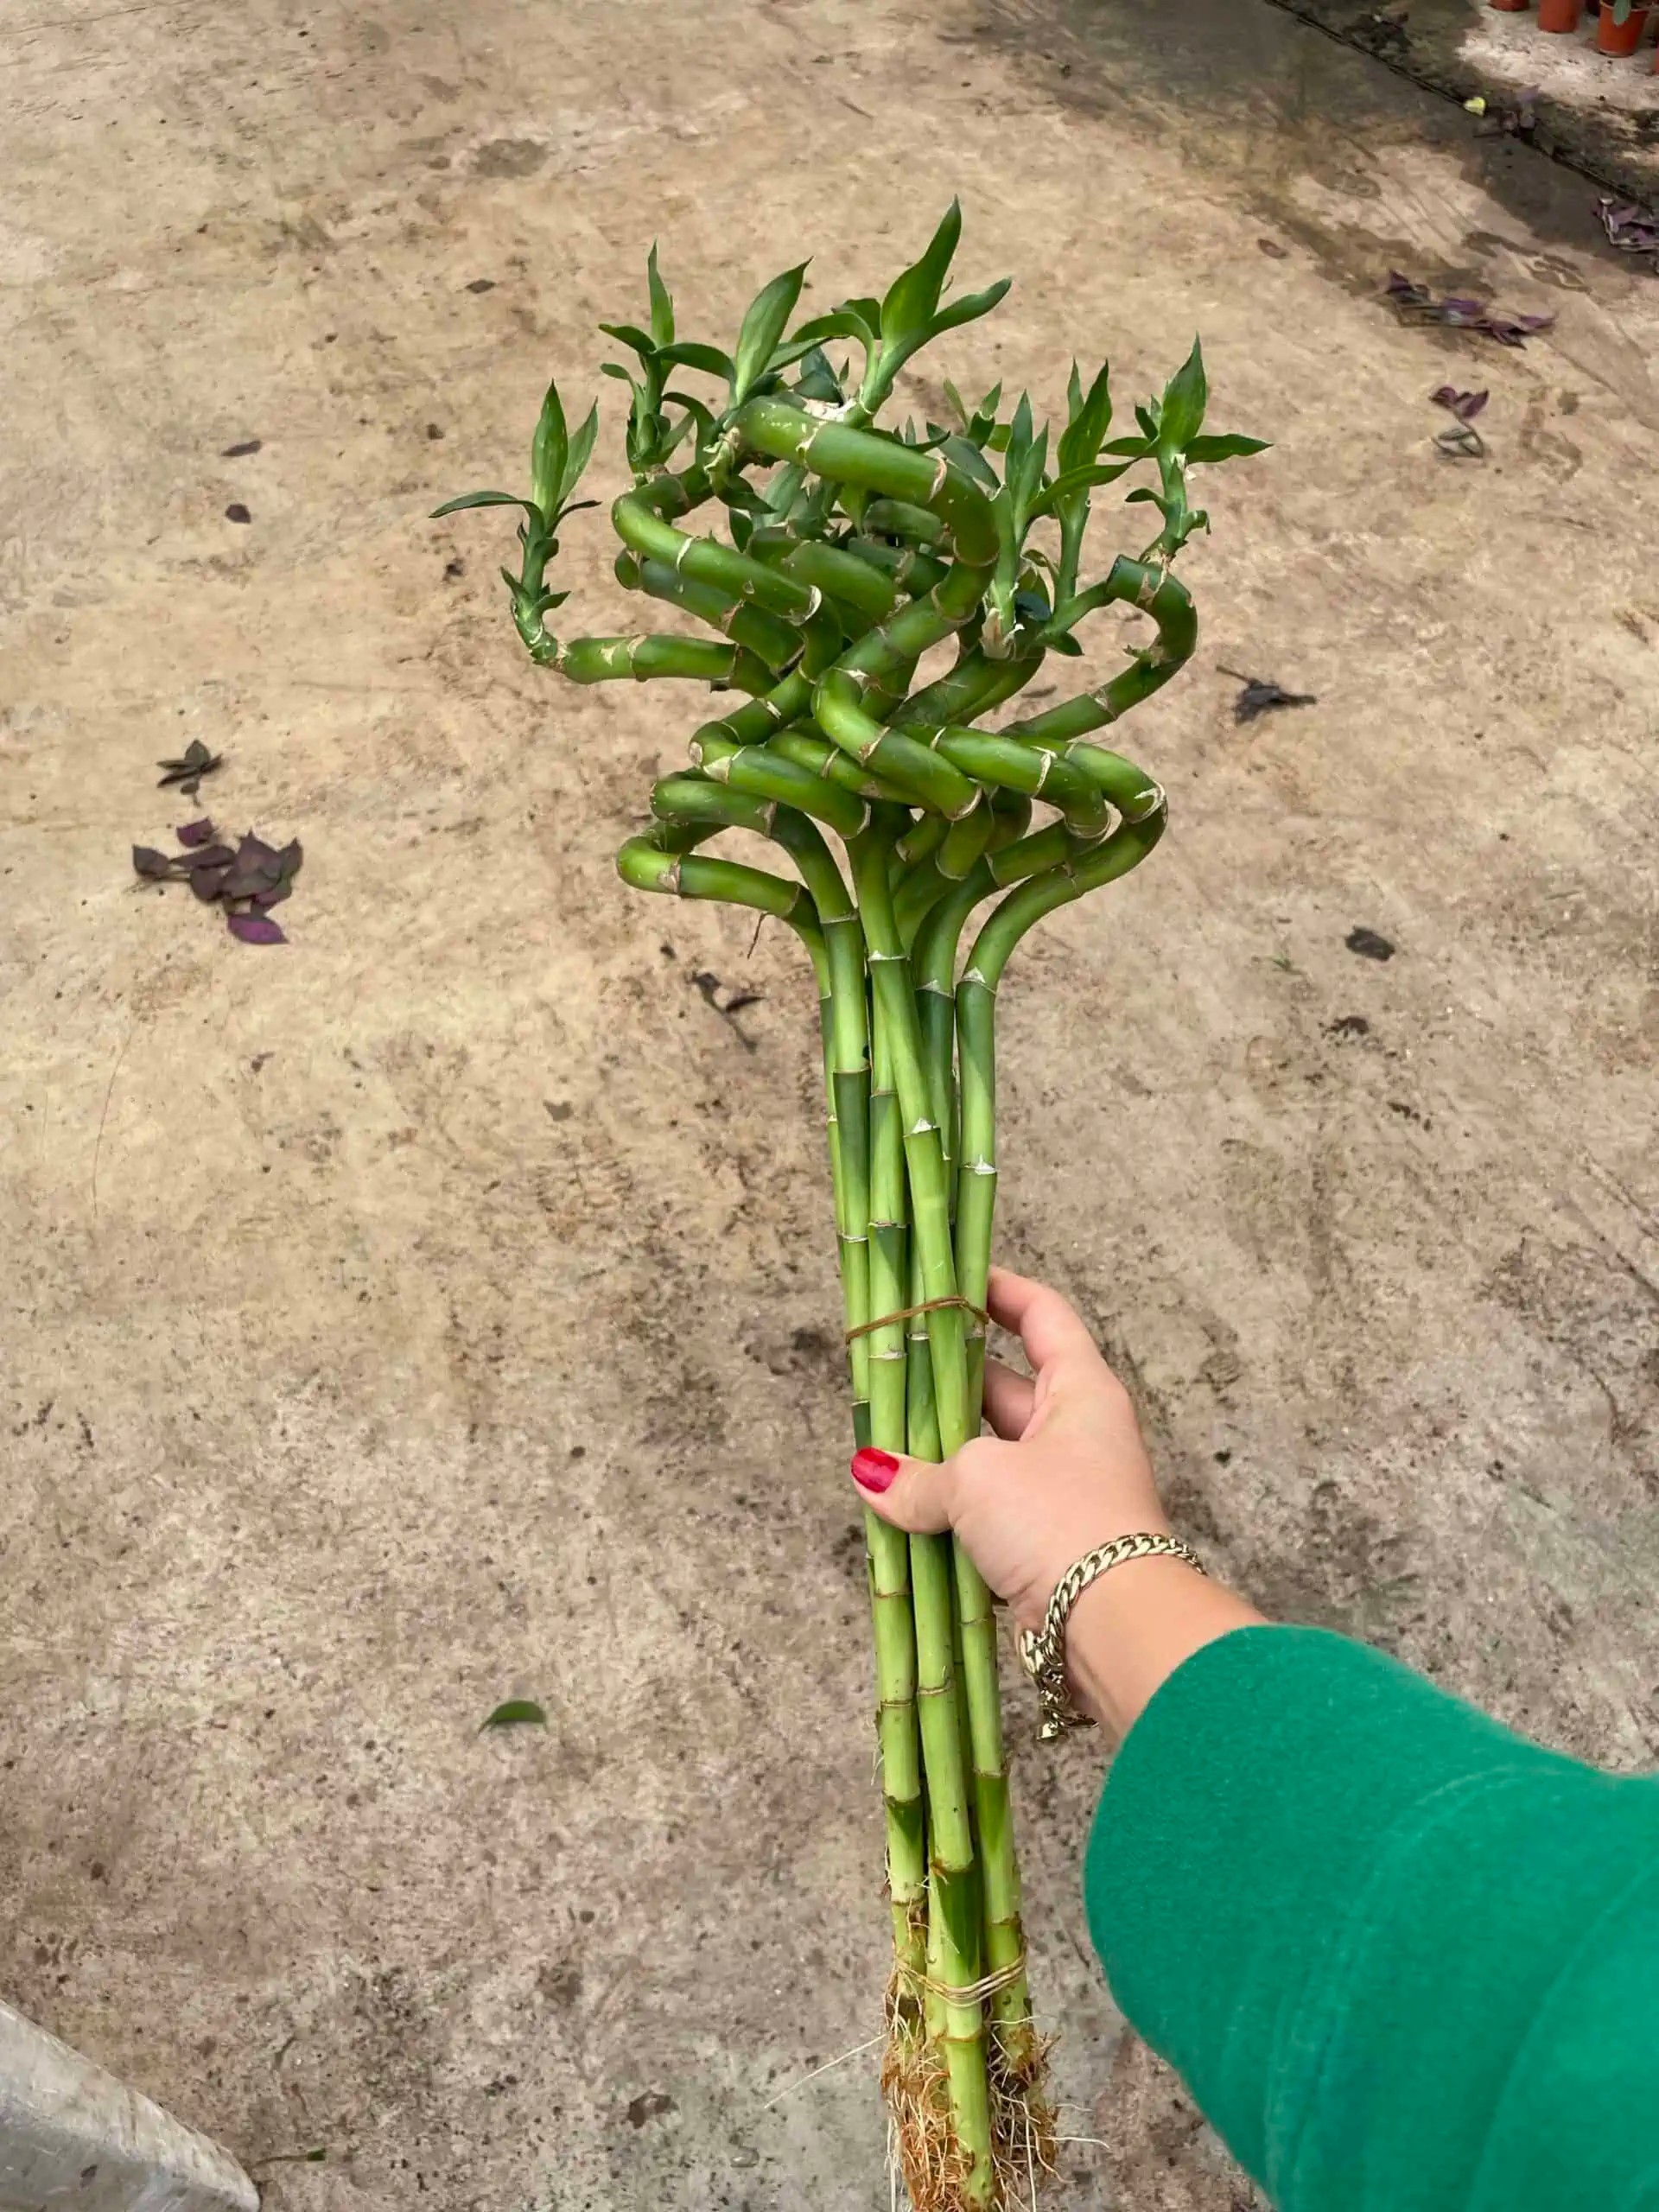 Favori Bitki Seti (80-100 cm areka palmiyesi- üç adet bambu 80-100 cm - starliçe 80-100 cm tek kök )